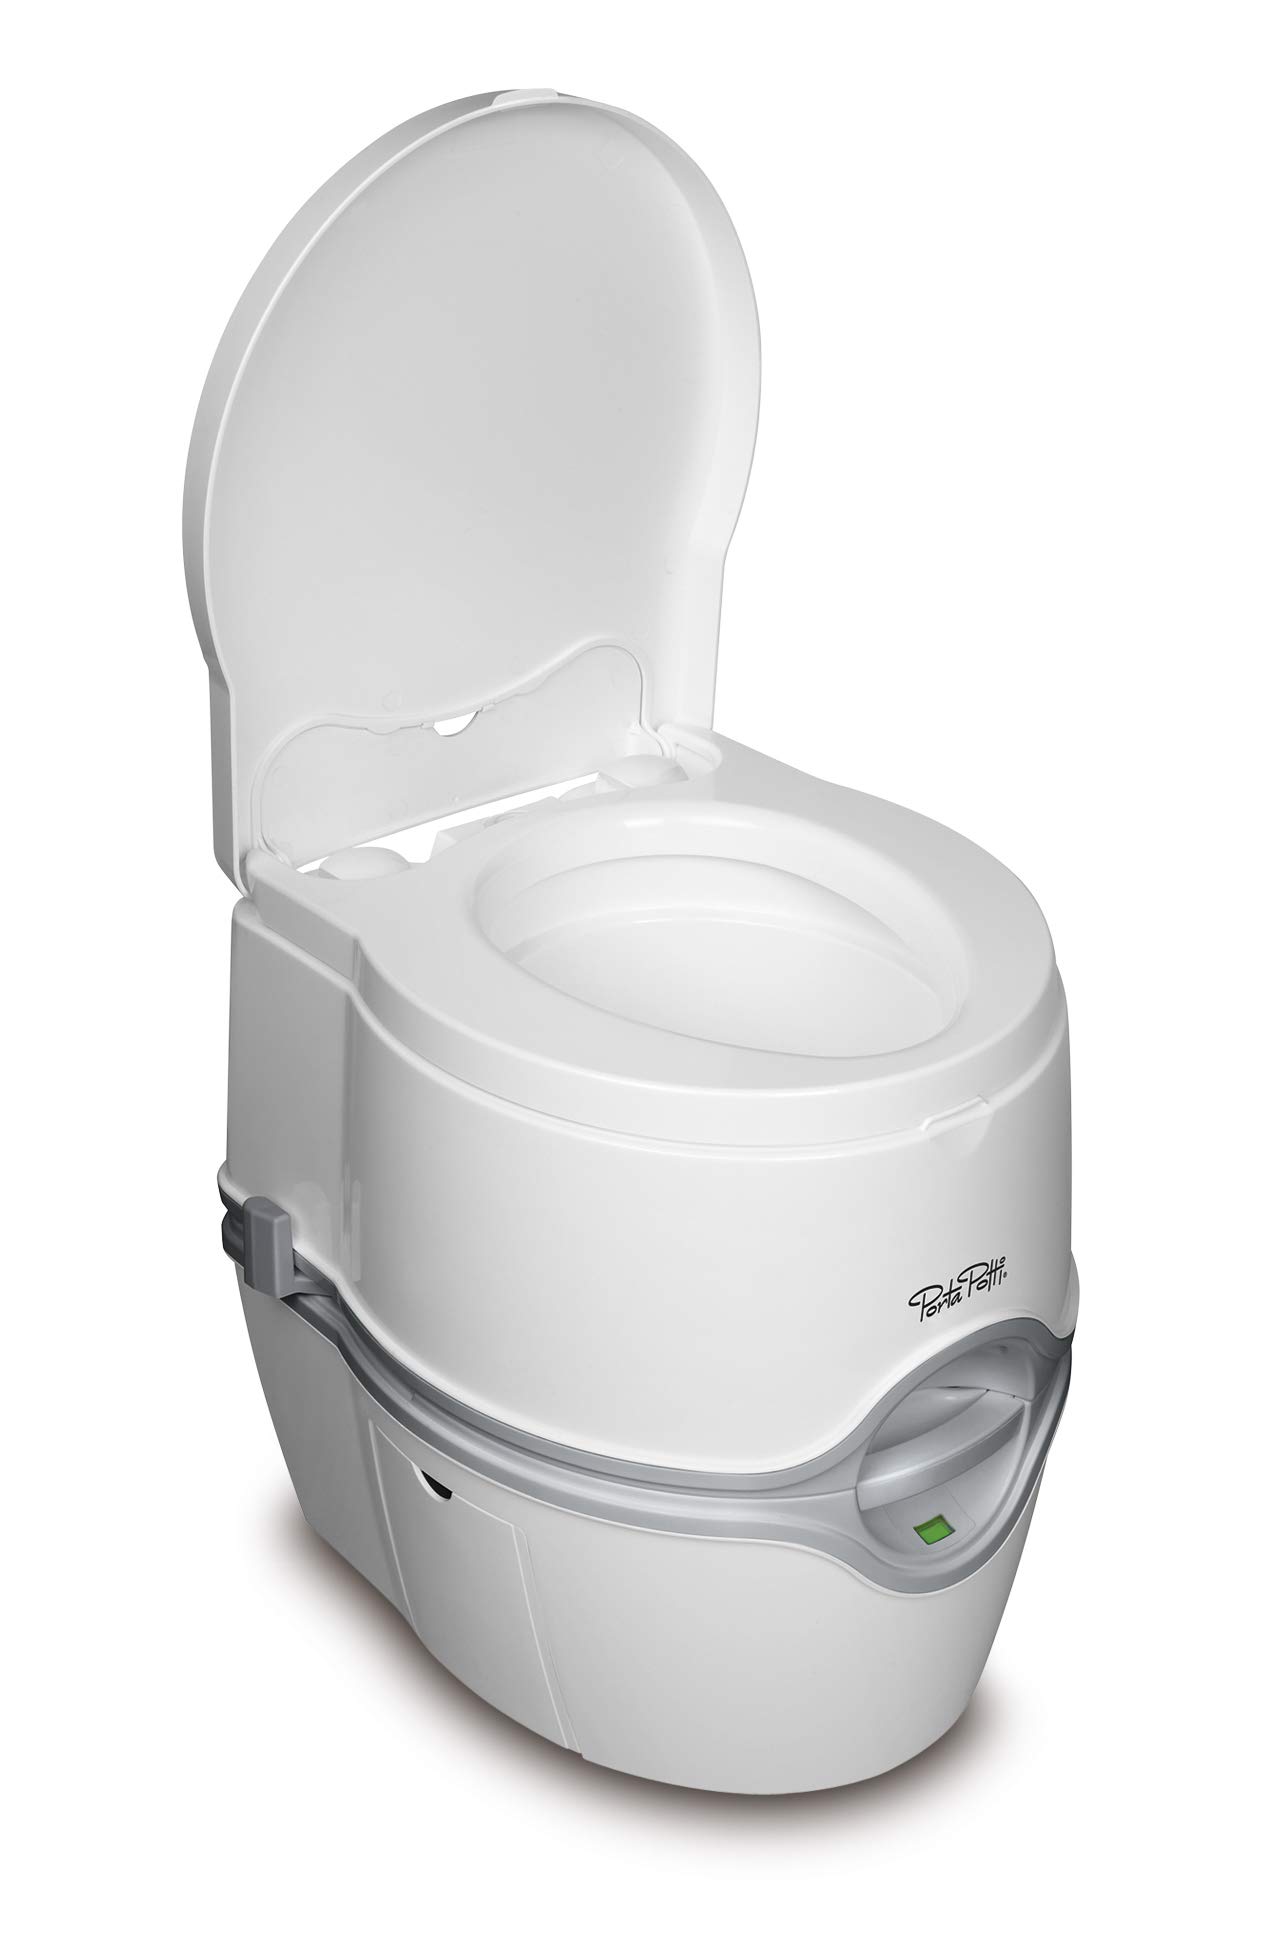 Thetford 92306 Porta Potti 565E (Elektric) Tragbare Toilette, Weiß-Grau, 448 x 388 x 450 mm von Thetford